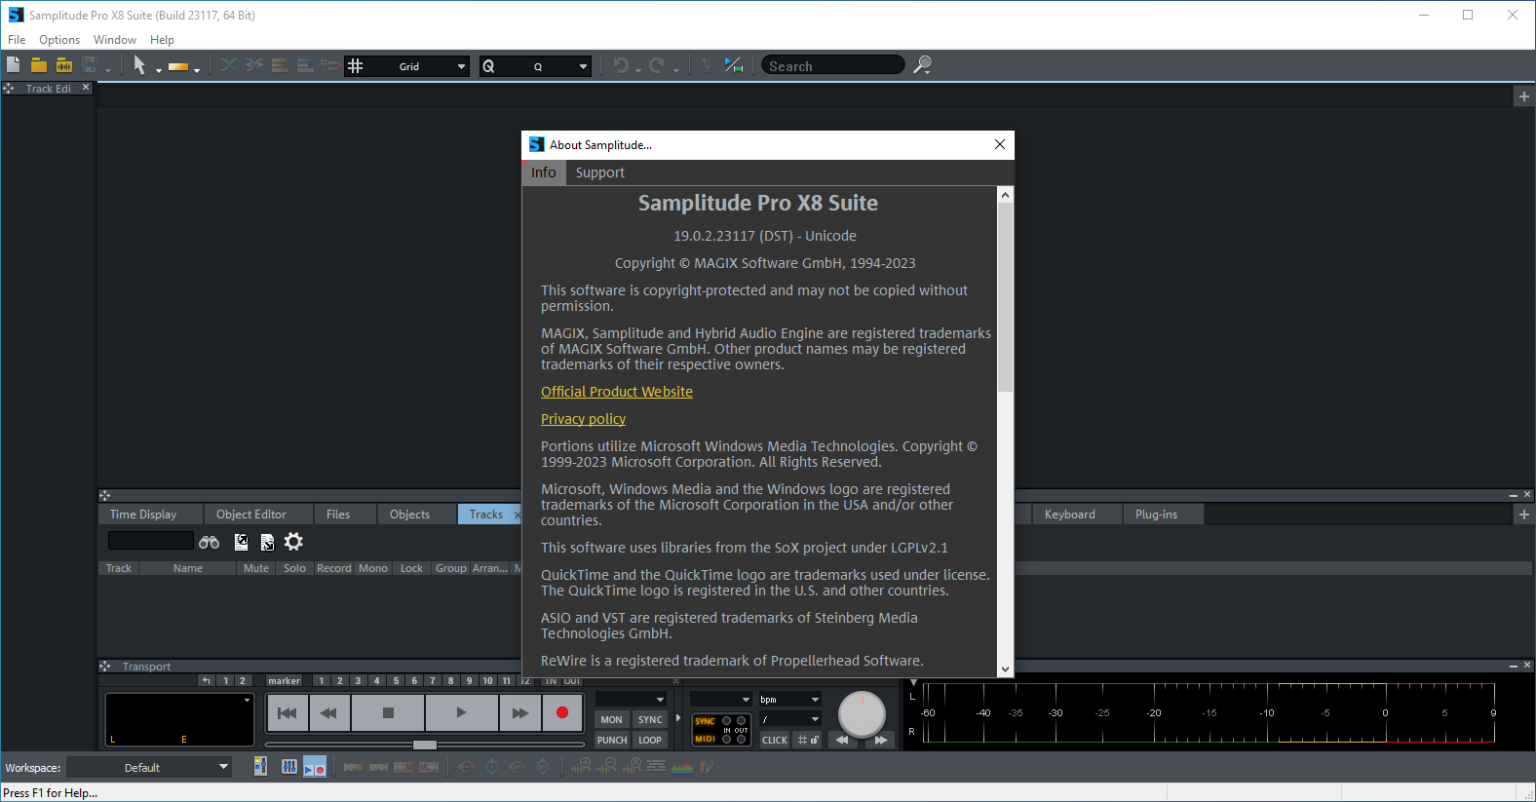 download the last version for ipod MAGIX Samplitude Pro X8 Suite 19.0.2.23117